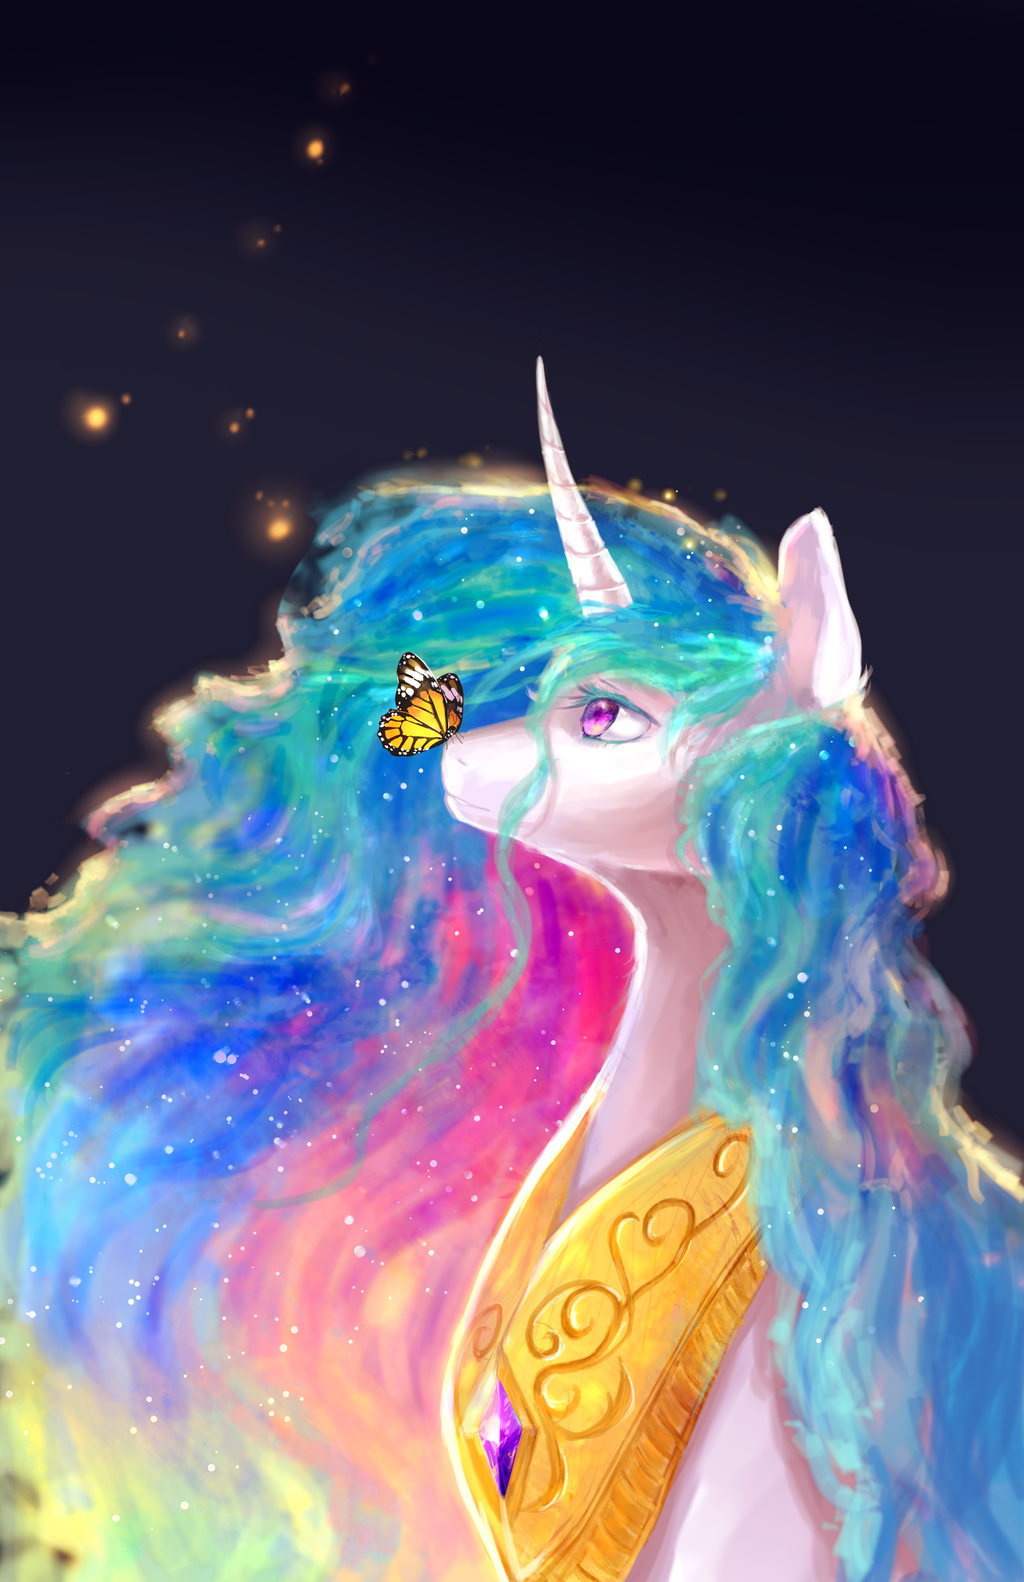 Фото Принцесса Селестия / Princess Celestia из мультсериала Дружба — это чудо / My Little Pony: Friendship Is Magic, by AquaGalaxy